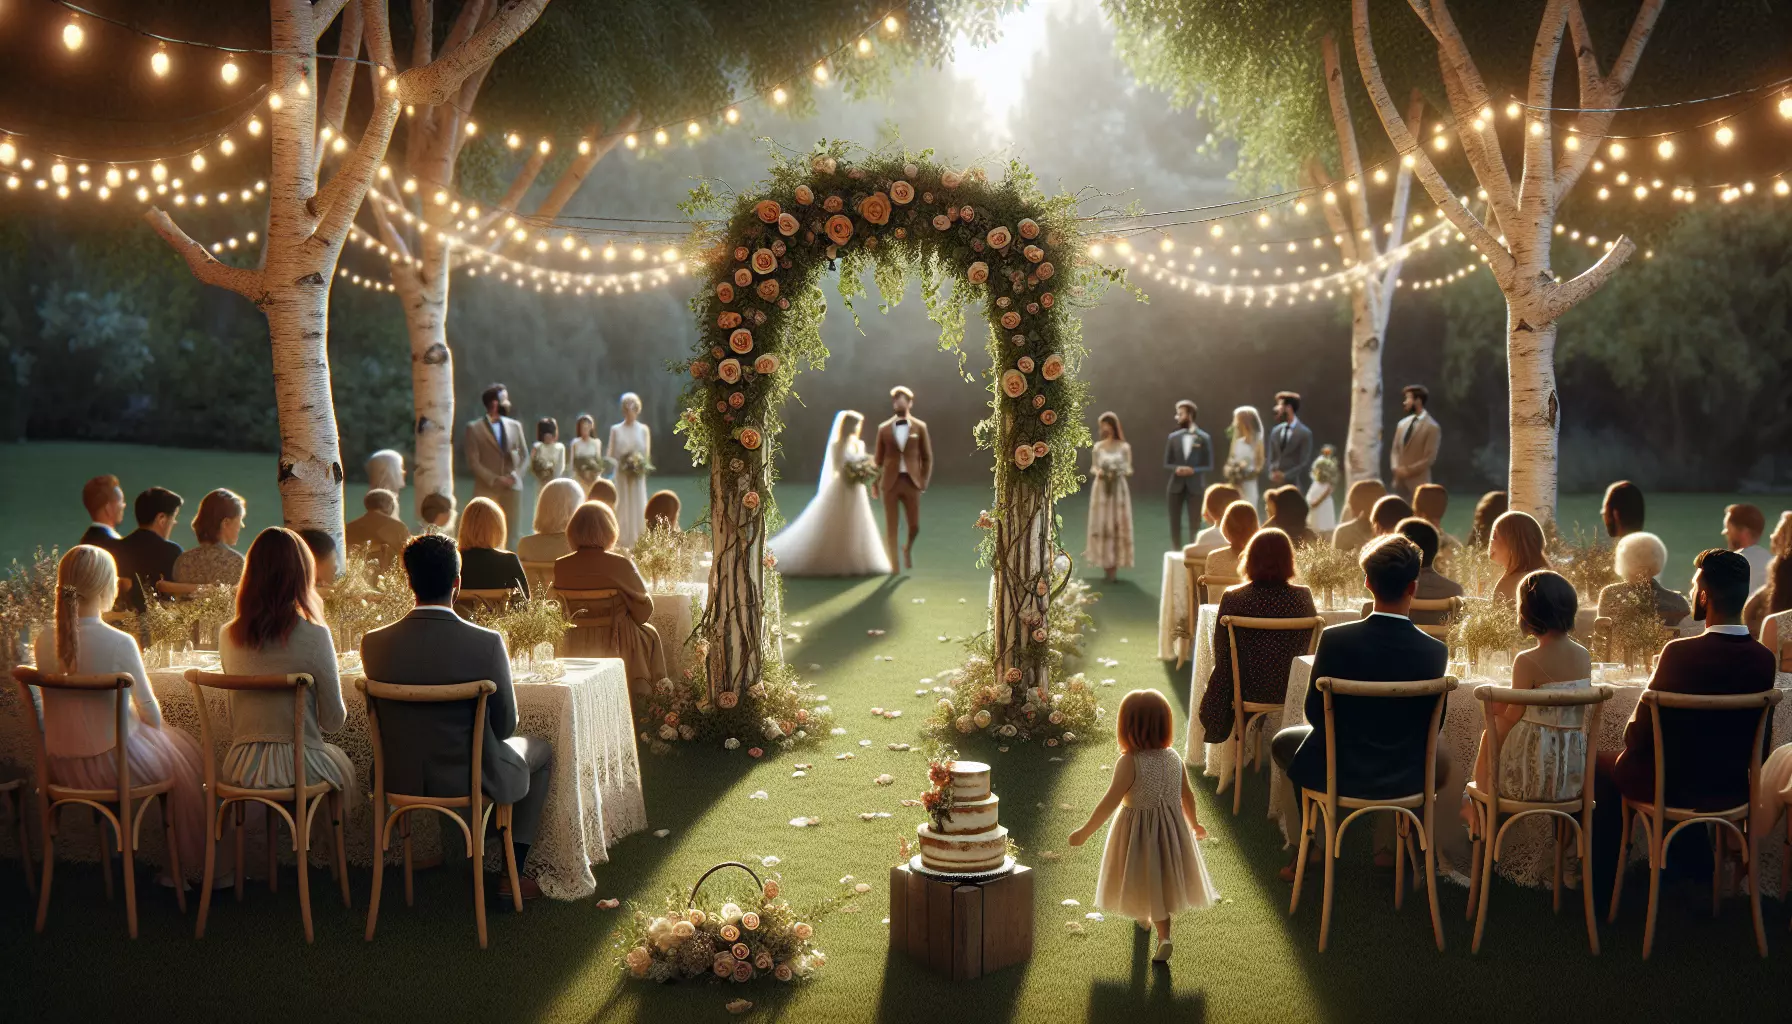 Backyard wedding ideas_illustration